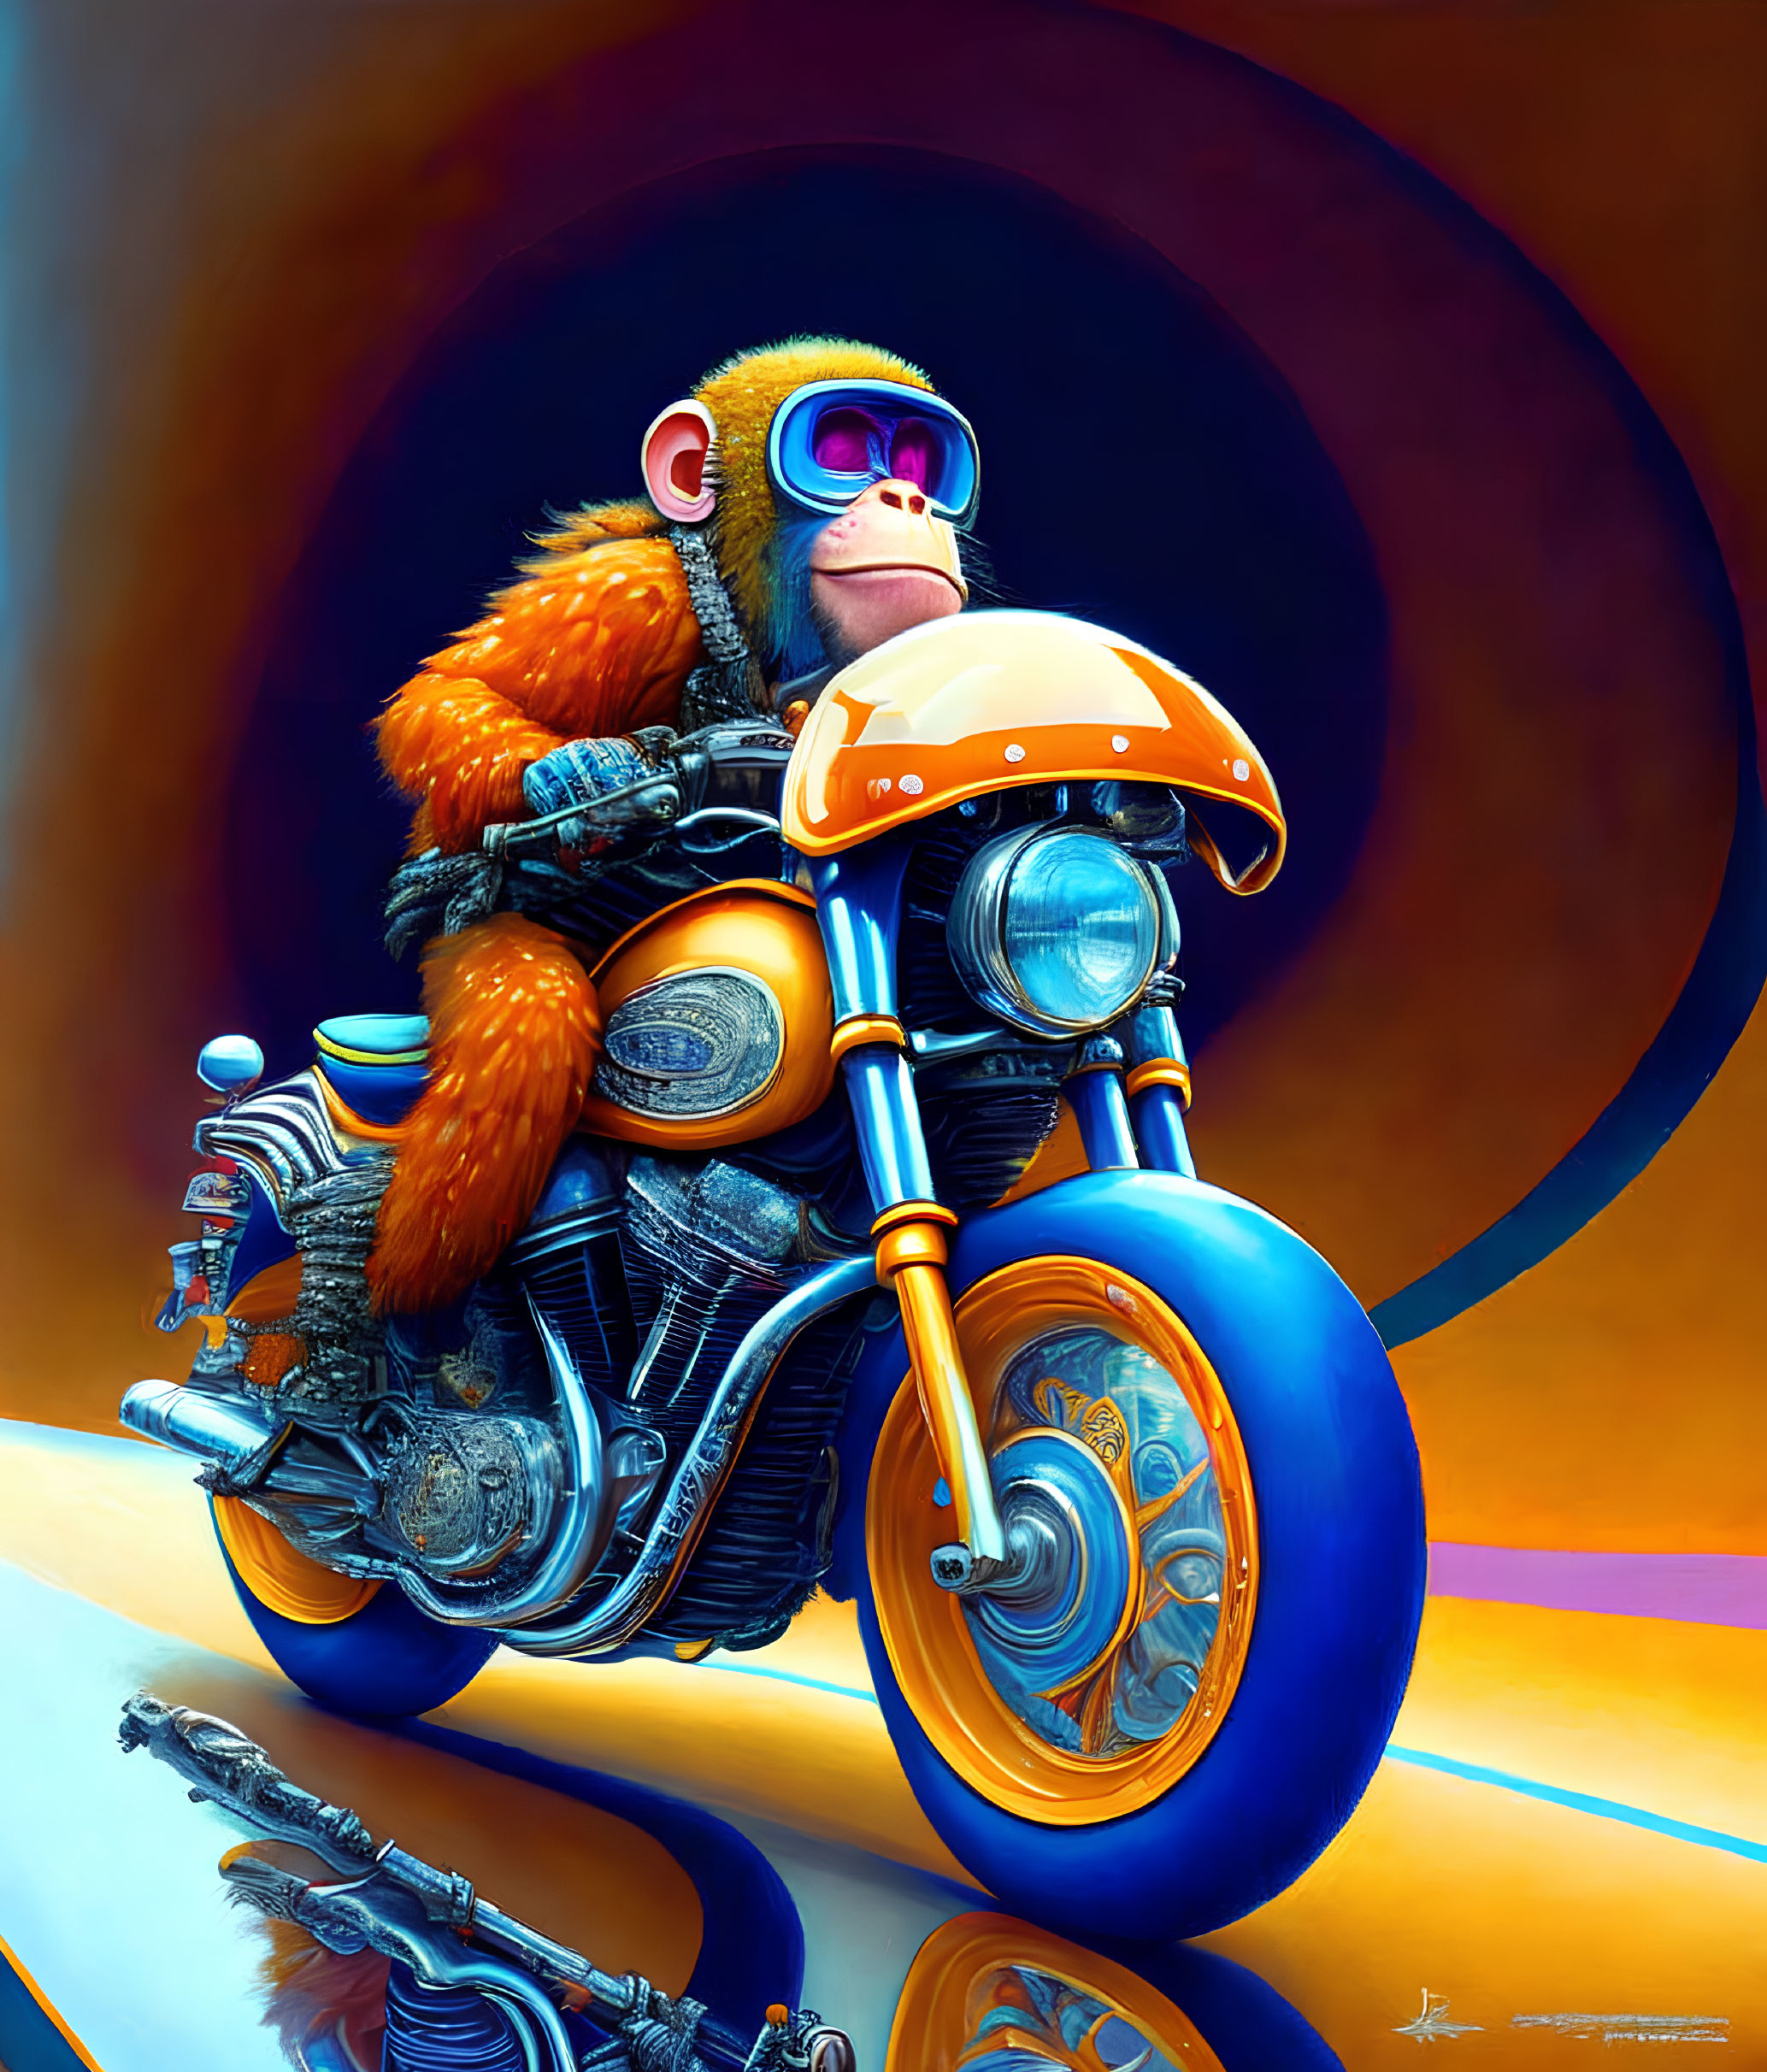 Stylish monkey with orange fur on futuristic motorcycle in colorful setting